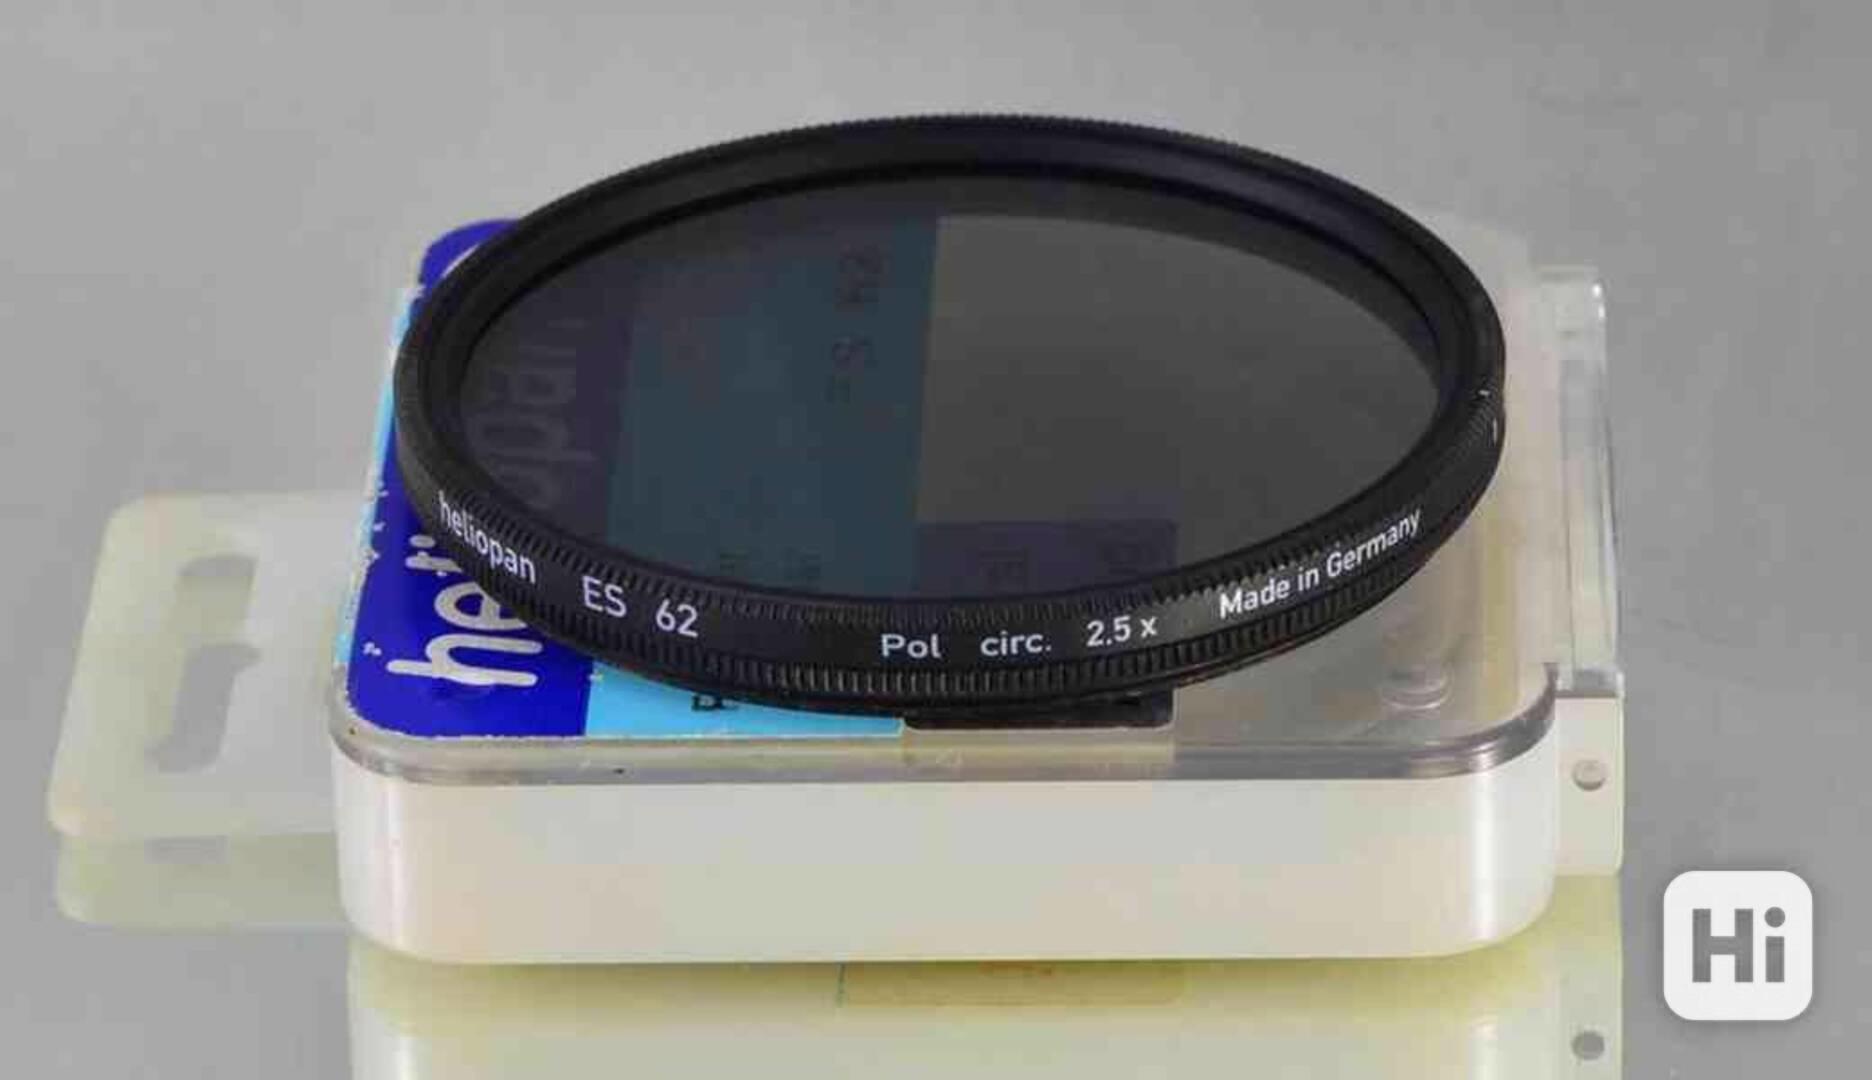 CPL filtr: heliopan ES 62 Pol circ 2 **62mm polarizační cir - foto 1